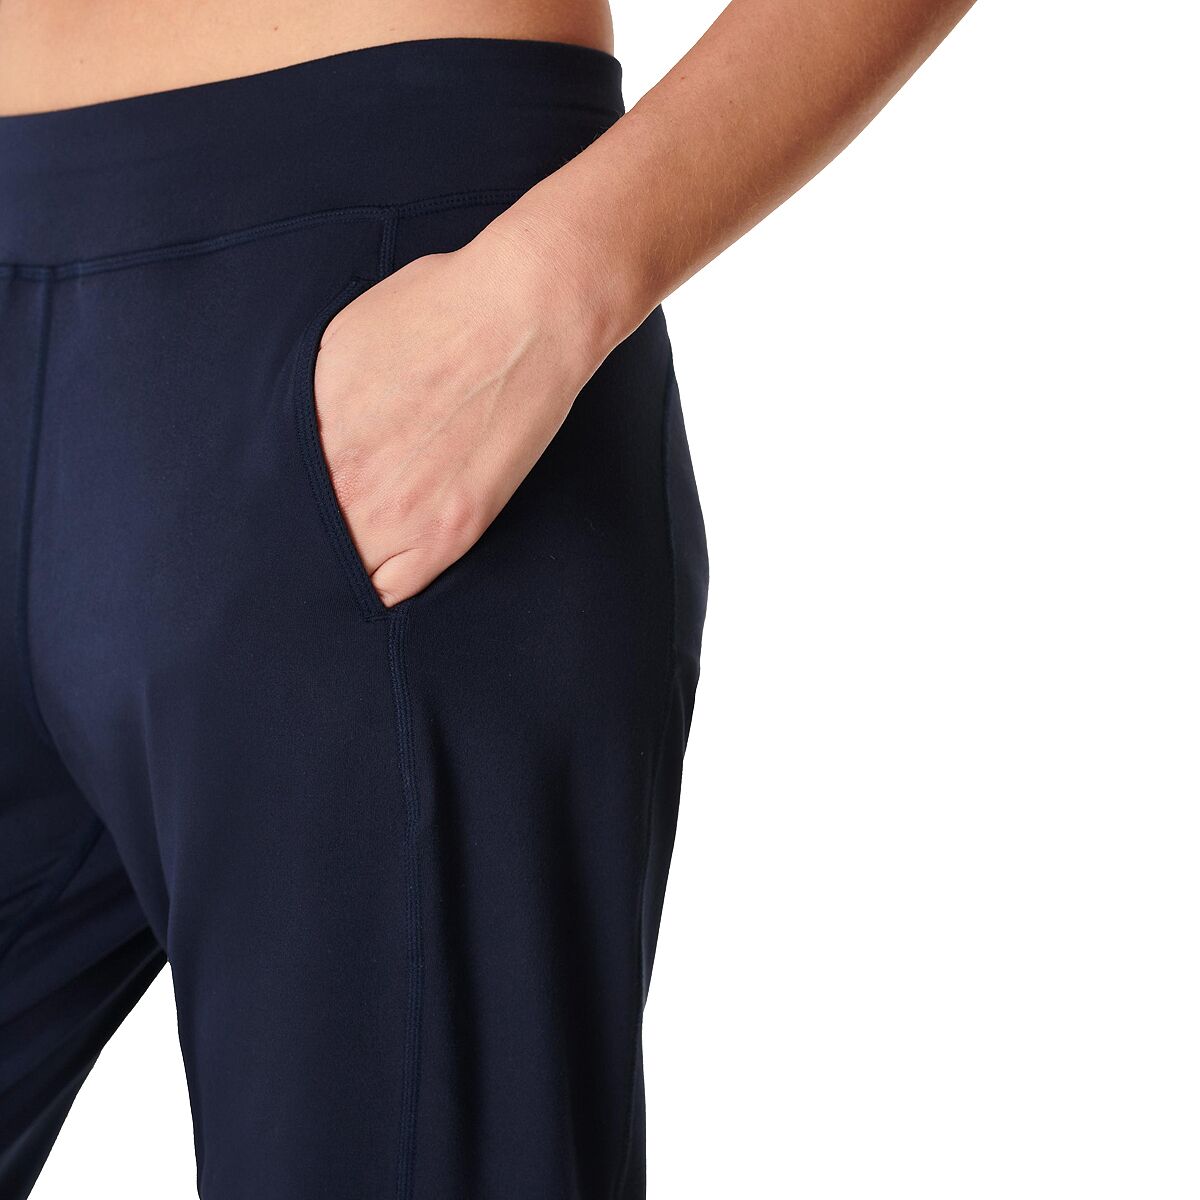 Gary Yoga Pants- navyblue, Women's Trousers & Yoga Pants